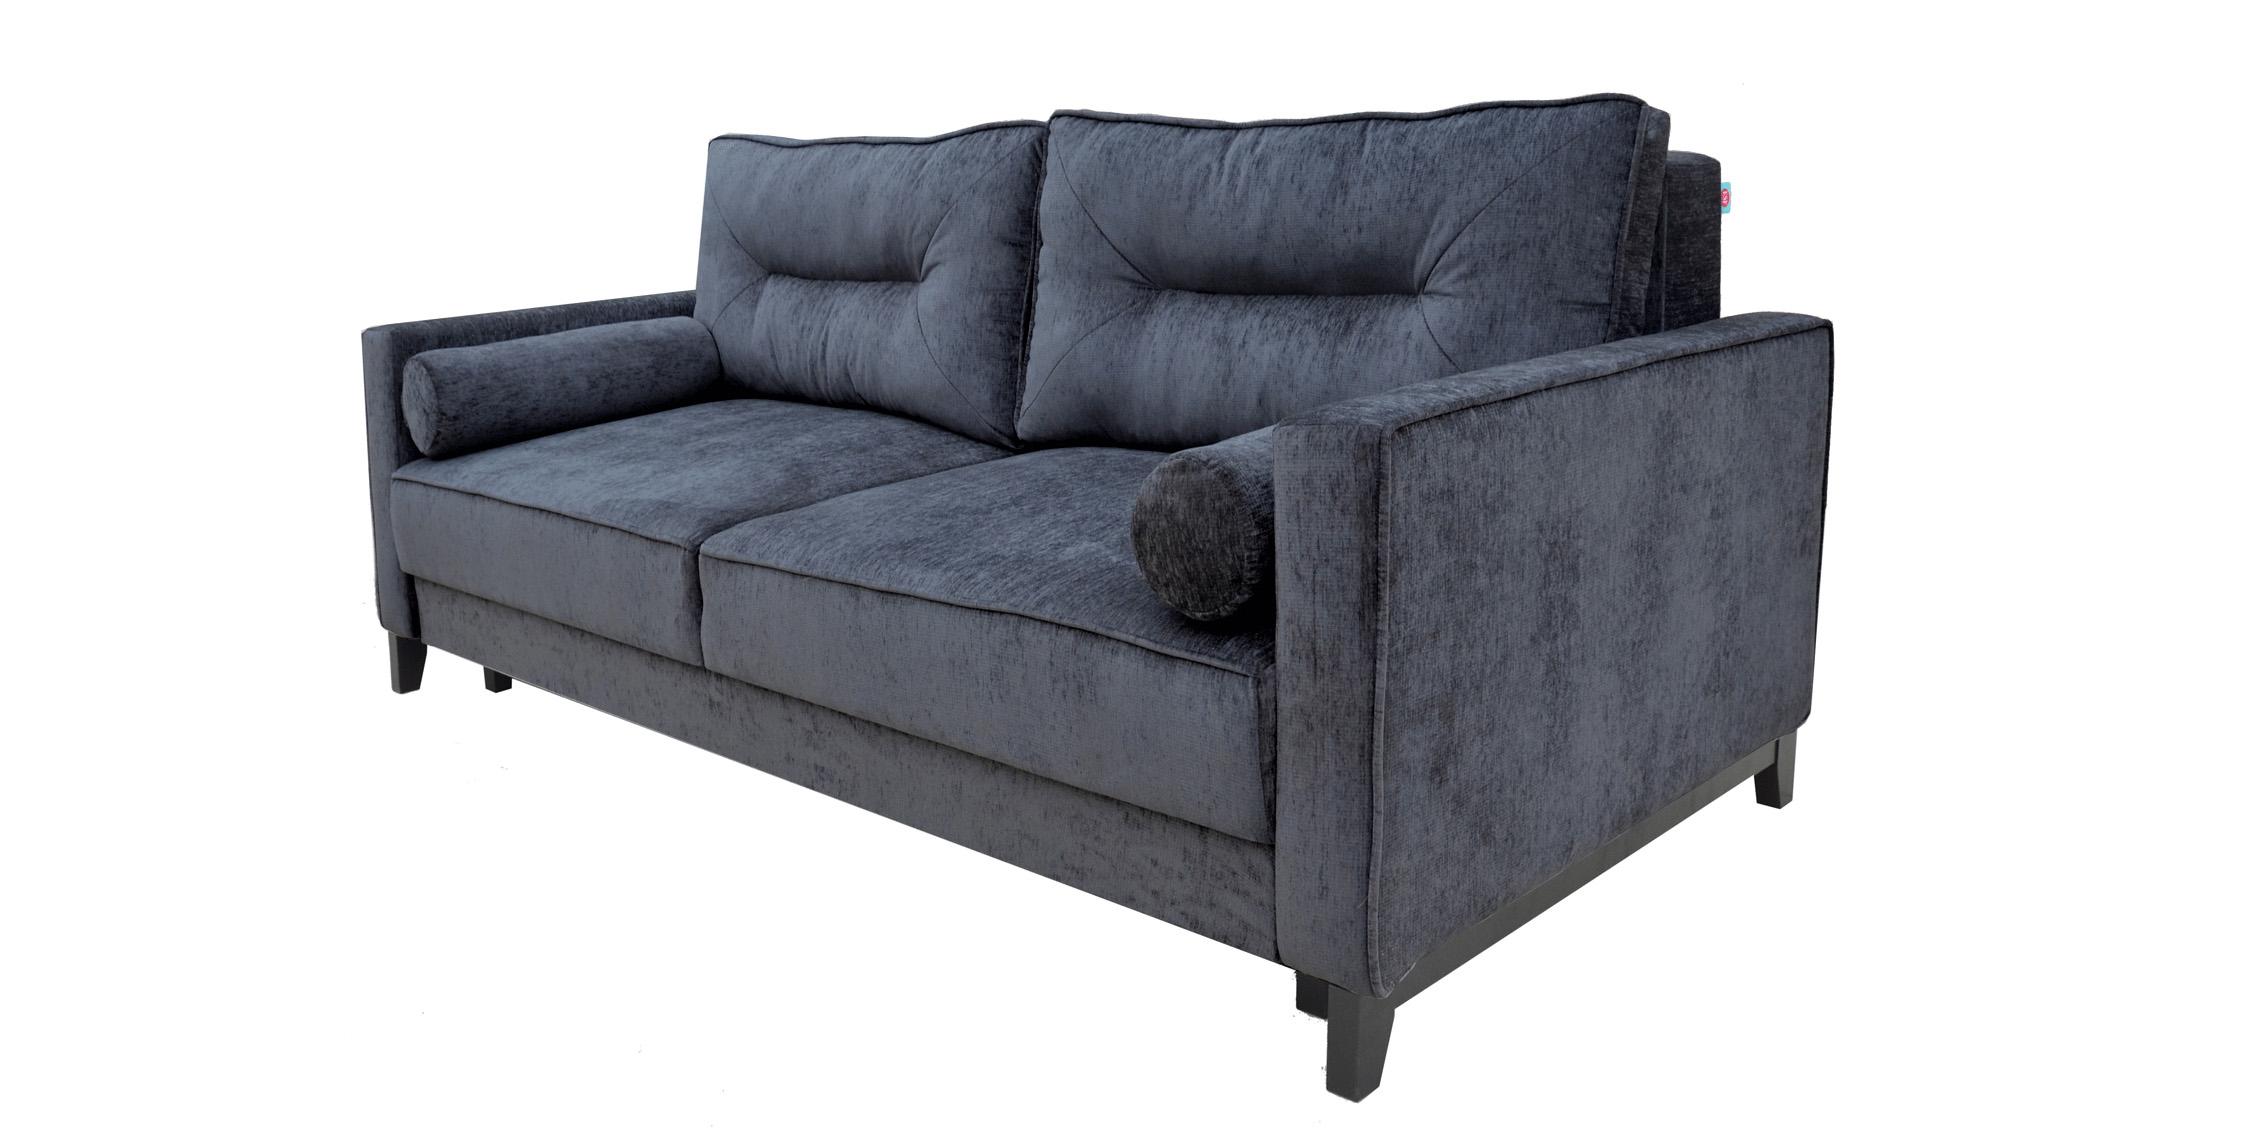 Contemporary, Modern Sofa bed PESAROSOFABED PESAROSOFABED in Slate gray Fabric